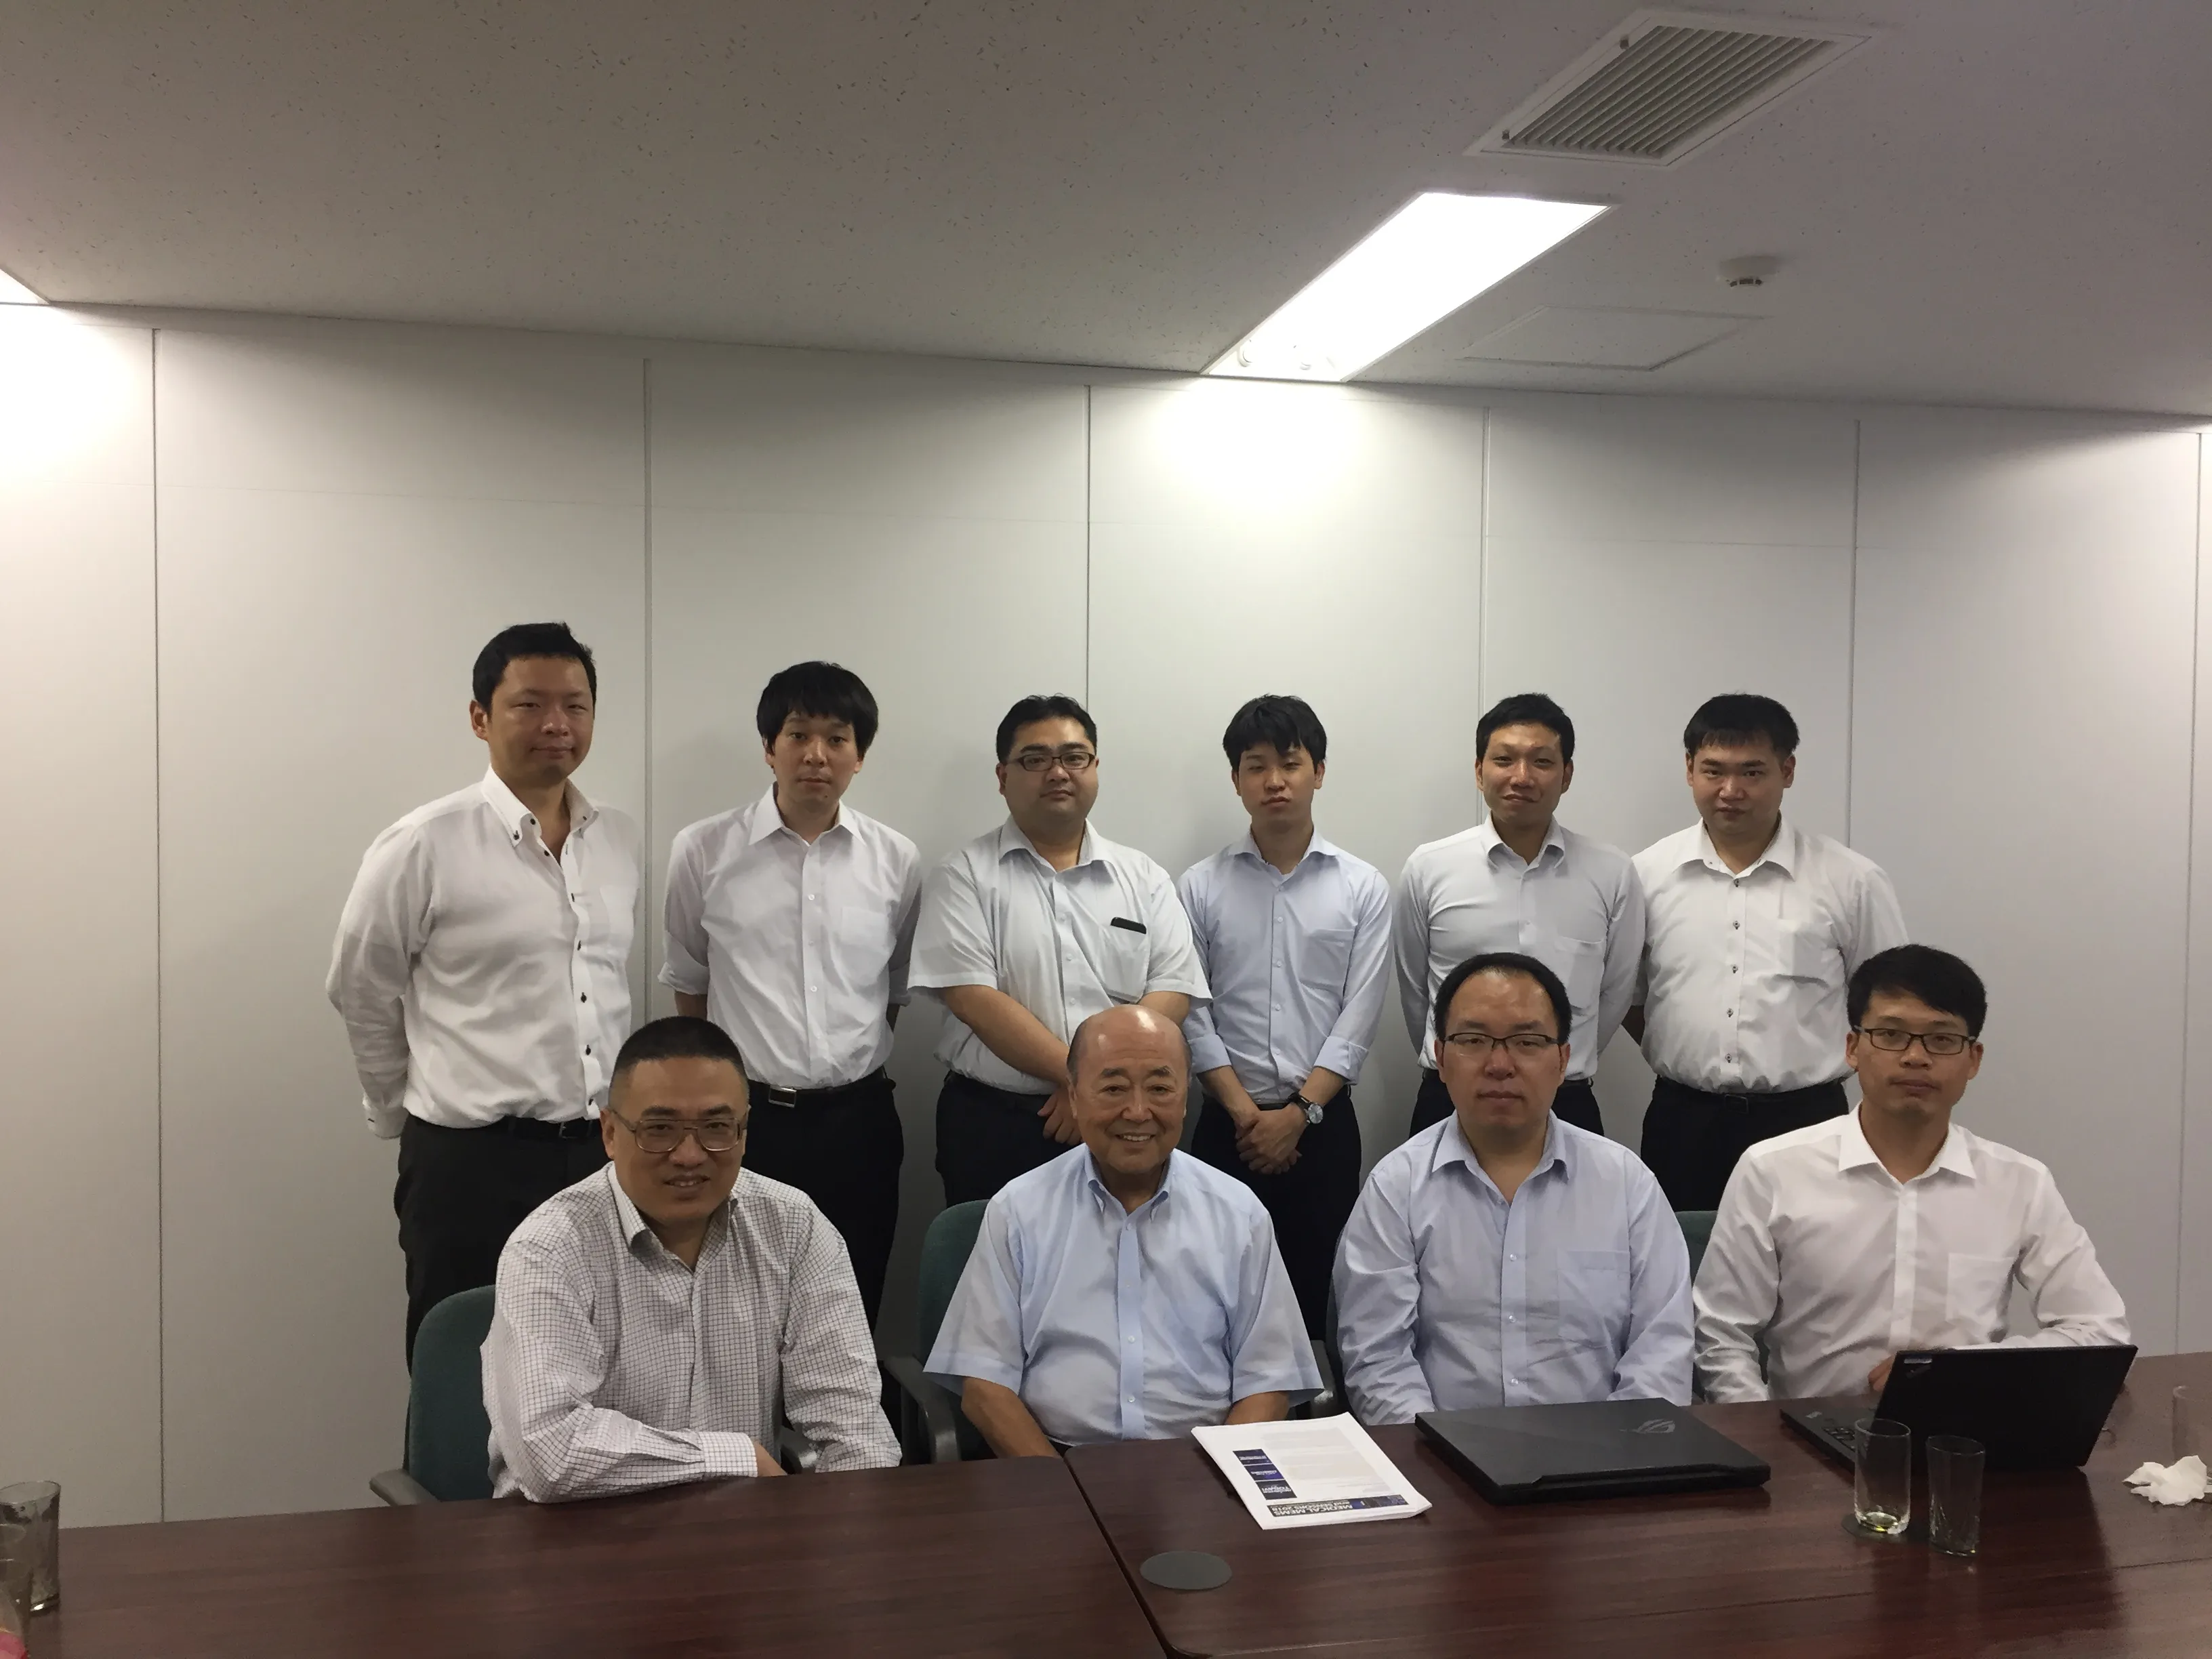 IntelliSense Software Japan team gathered together in Tokyo at 2019